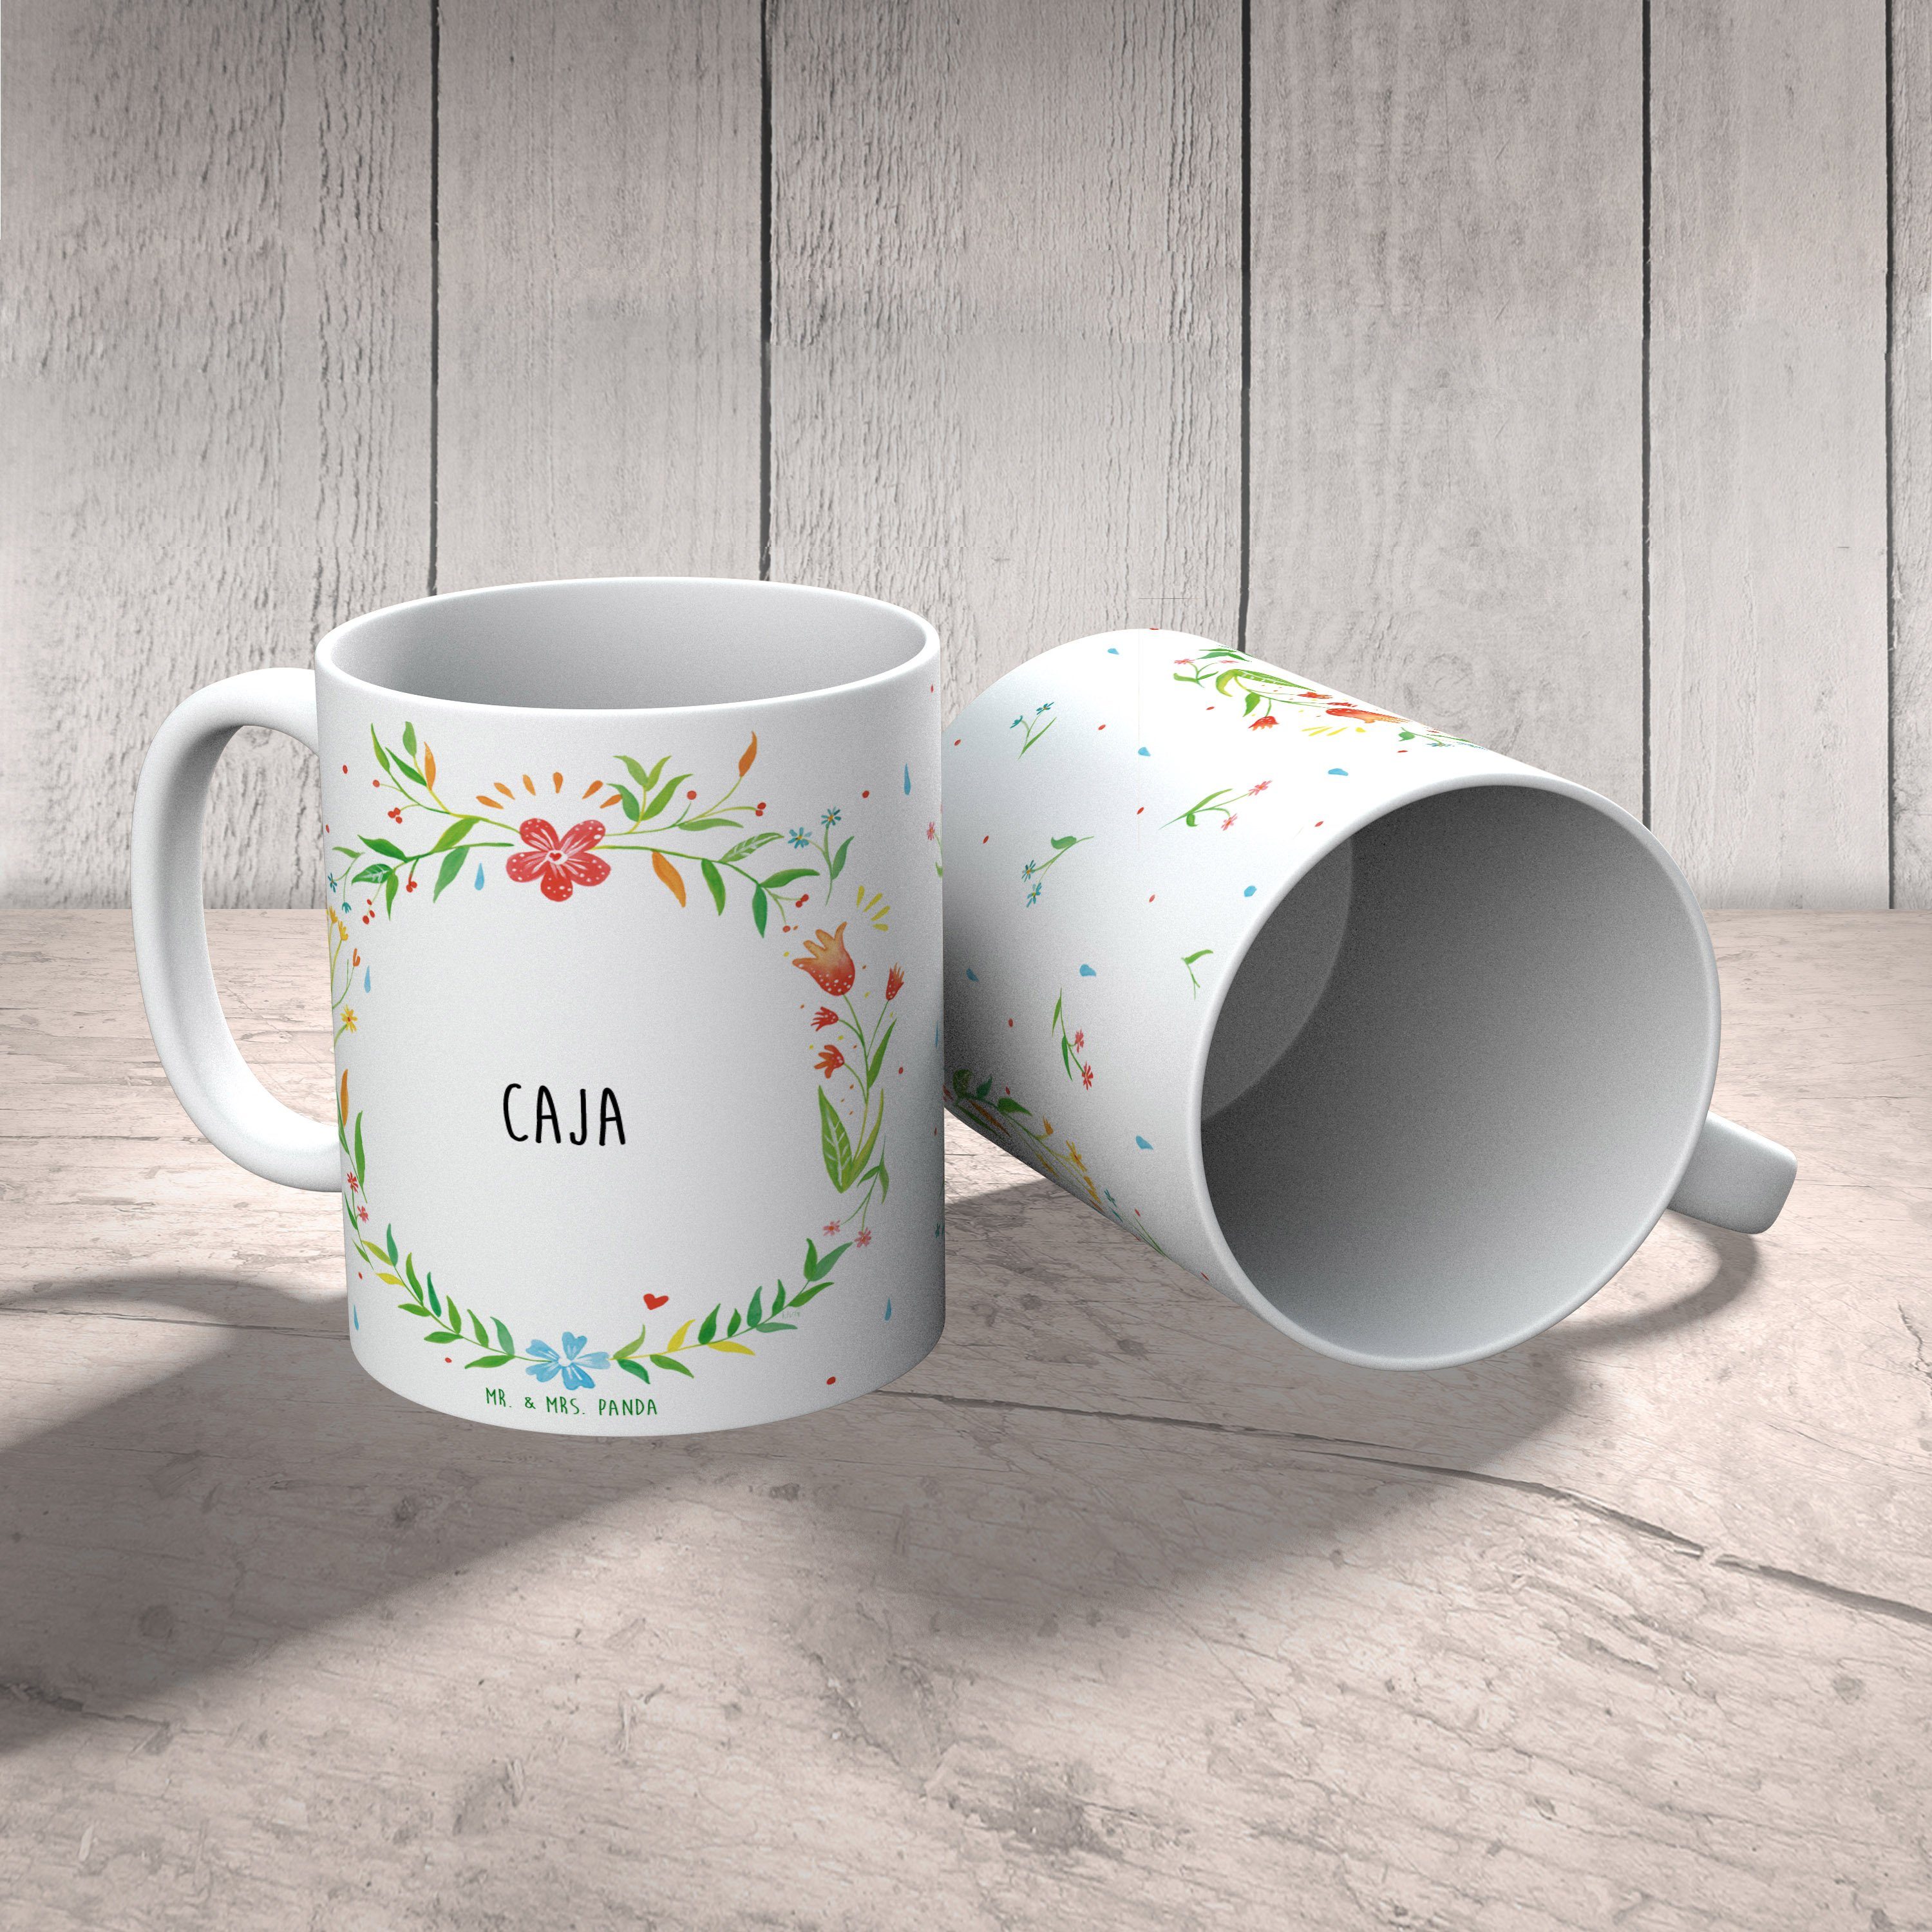 Mr. Mrs. Keramik Tasse Tasse Panda Caja Kaffeetasse, Teebecher, Geschenk, Motive, Tasse Sprüche, & -